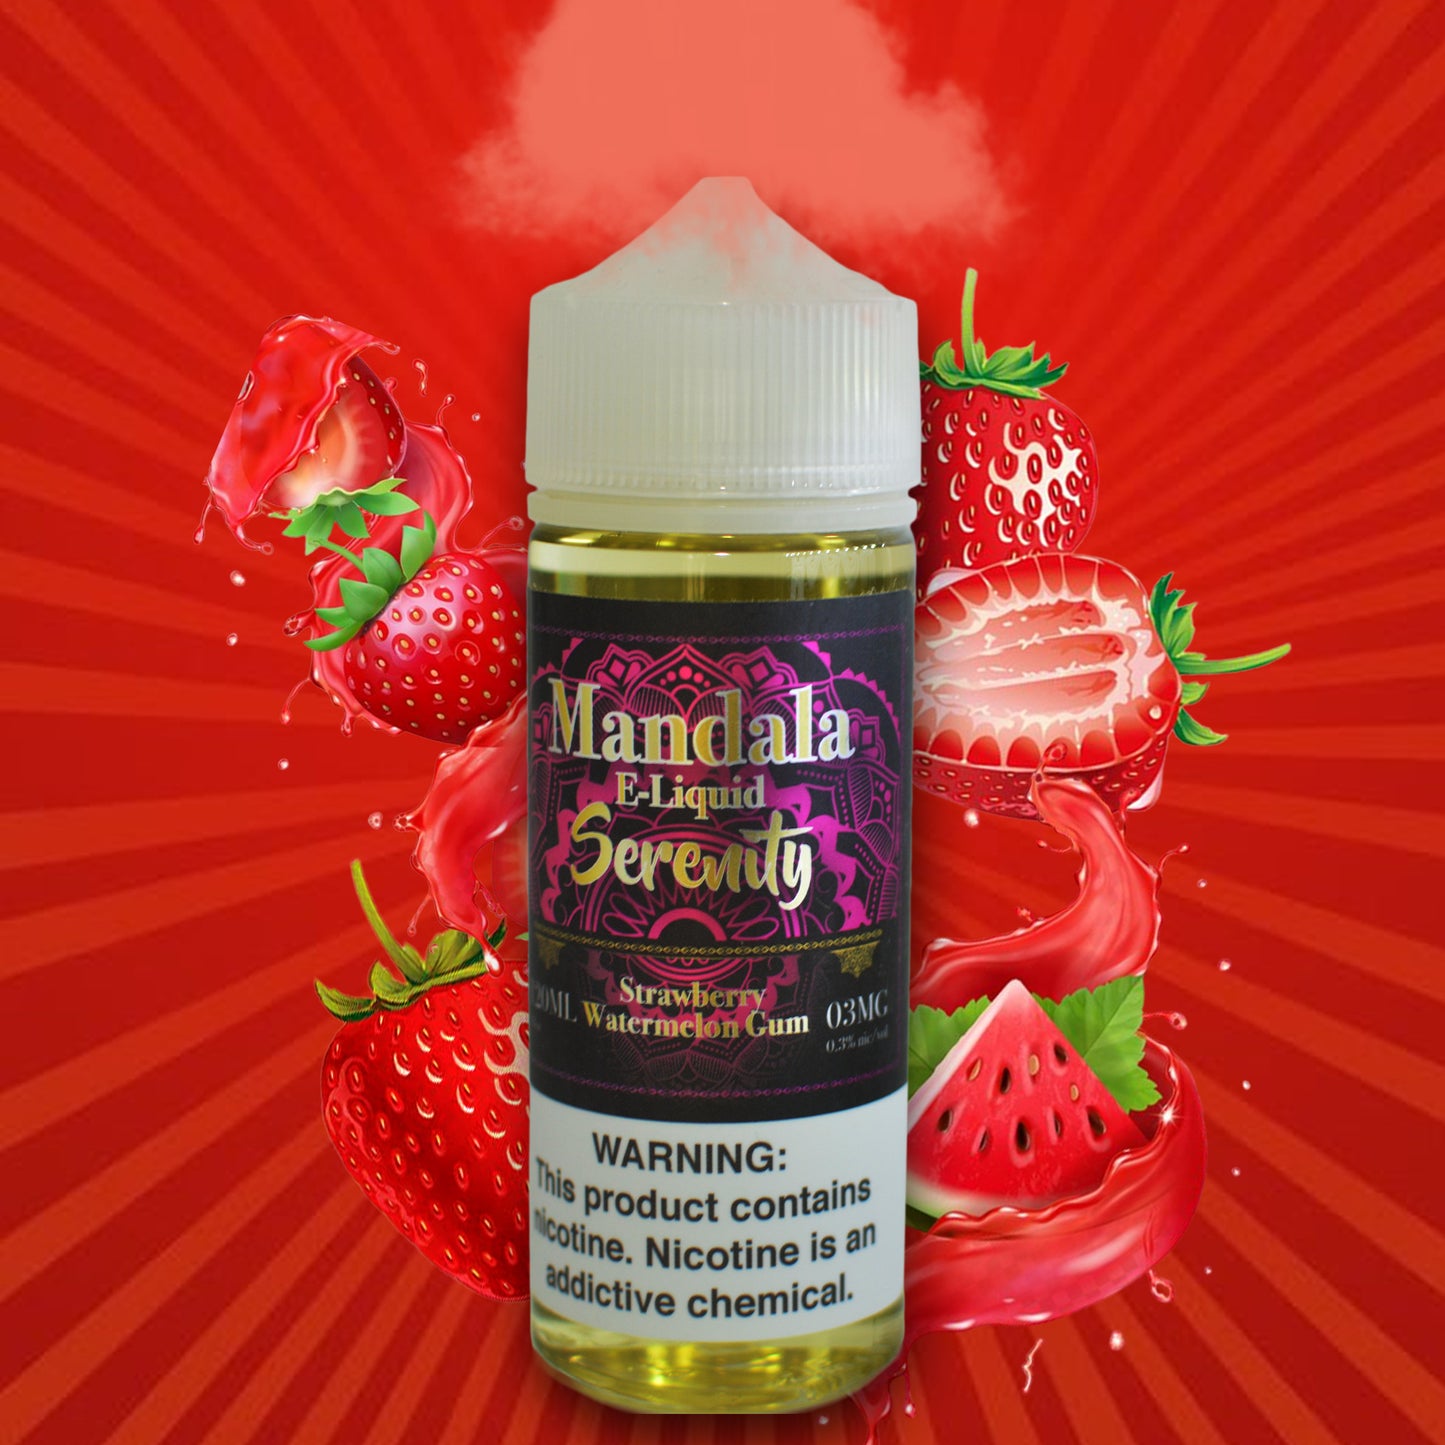 Mandala E-Liquid Serenity Strawberry Watermelon Bubblegum